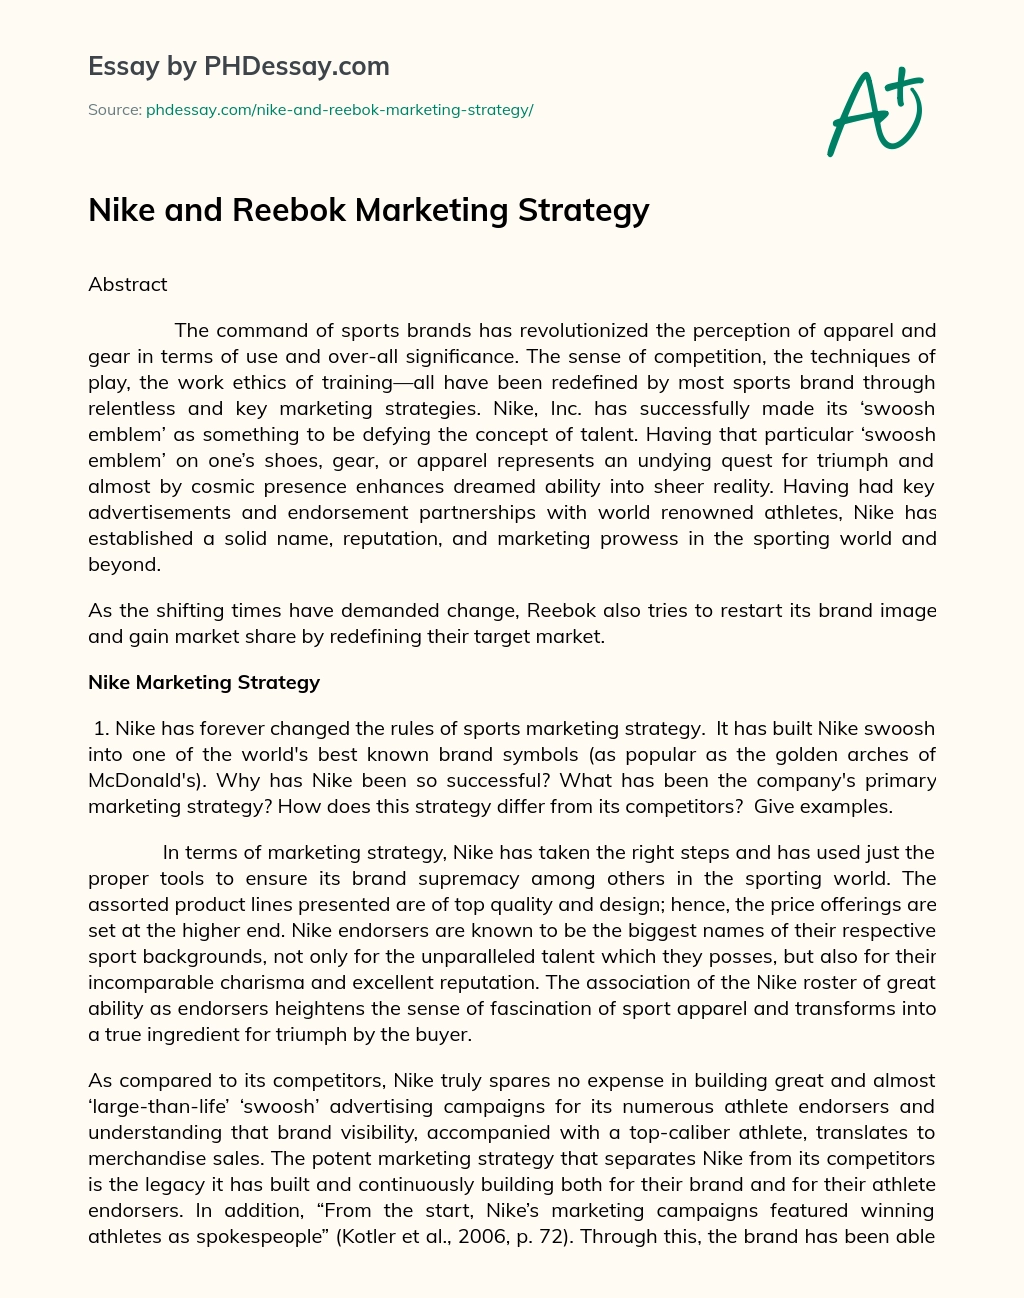 Nike and Reebok Marketing Strategy essay